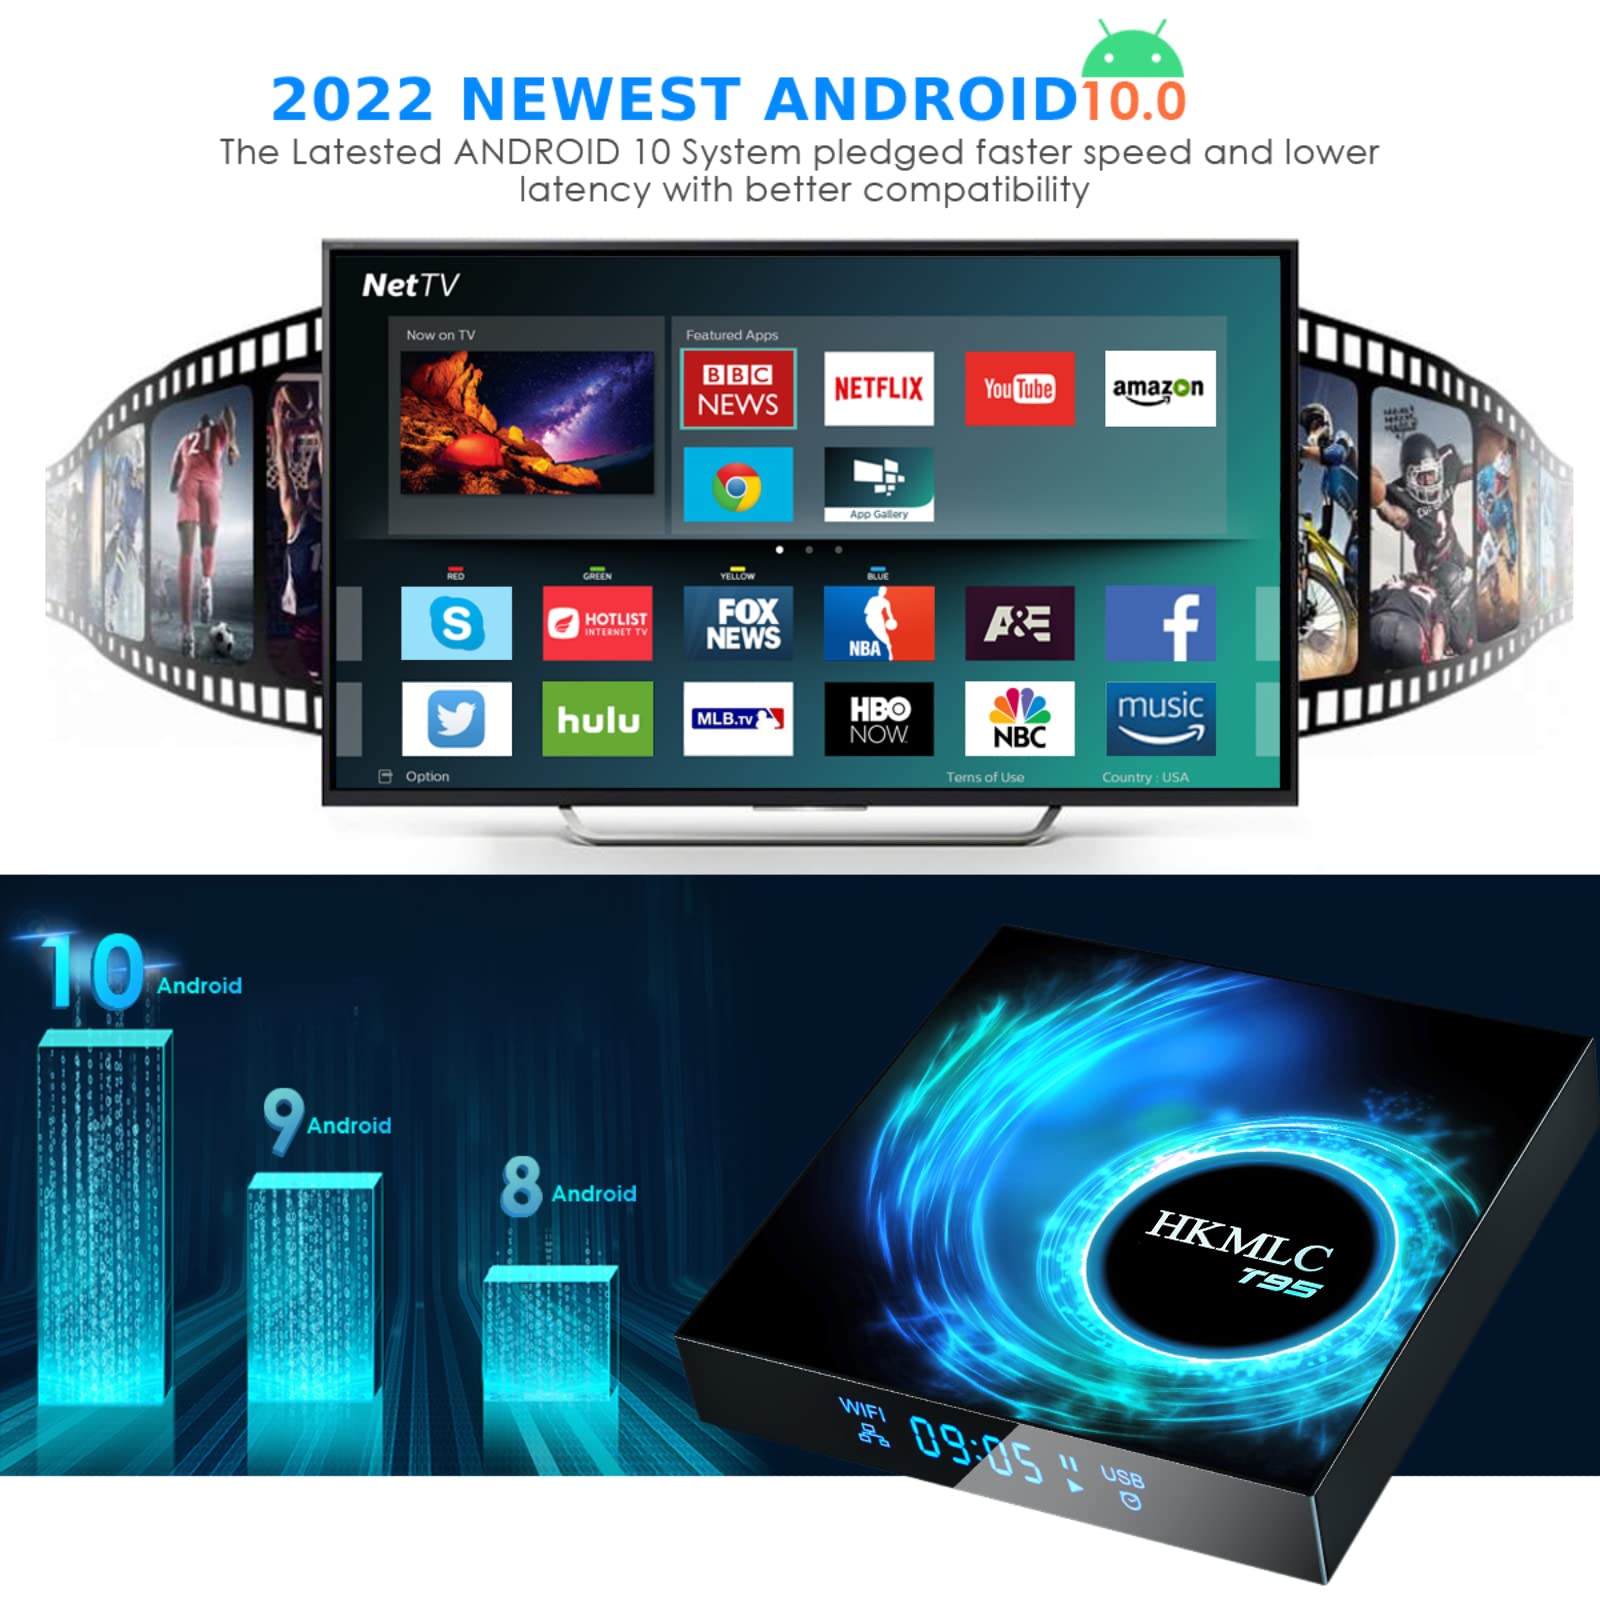 HKMLC Android TV Box, Android Box 4GB ROM 128GB RAM with Wireless Mini Keyboard, Android TV Box Allwinner H616 Quad-Core 64bit with Dual WiFi 2.4G/5.8G 3D 4K/6K USB 3.0 HDR TV Box